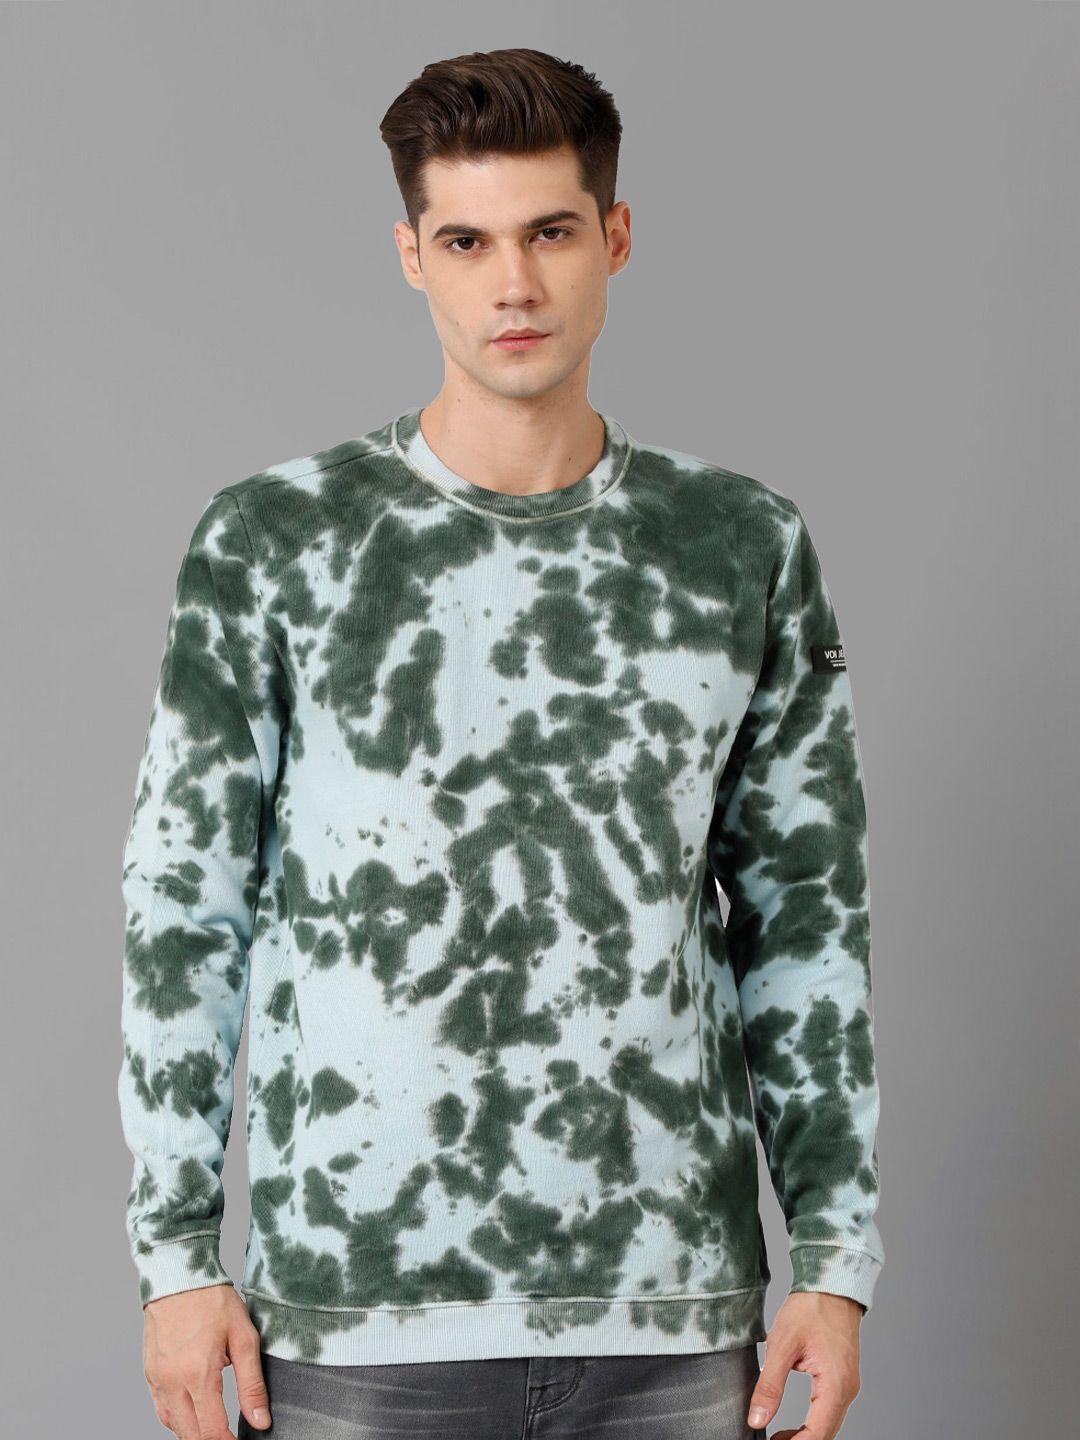 voi jeans abstract printed cotton sweatshirt